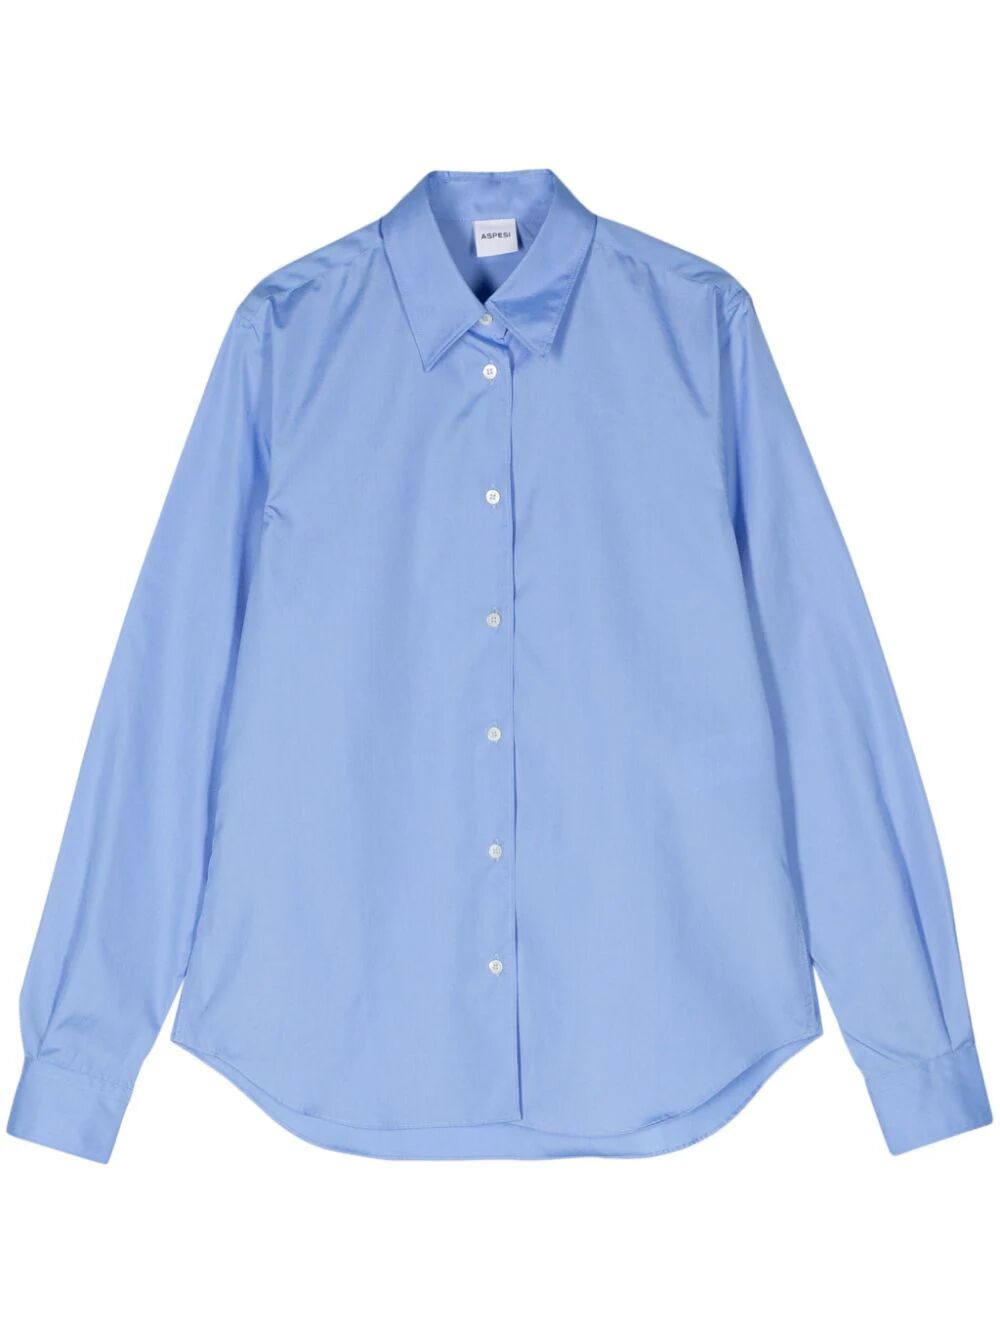 Aspesi Mod 5422 Shirt In Blue